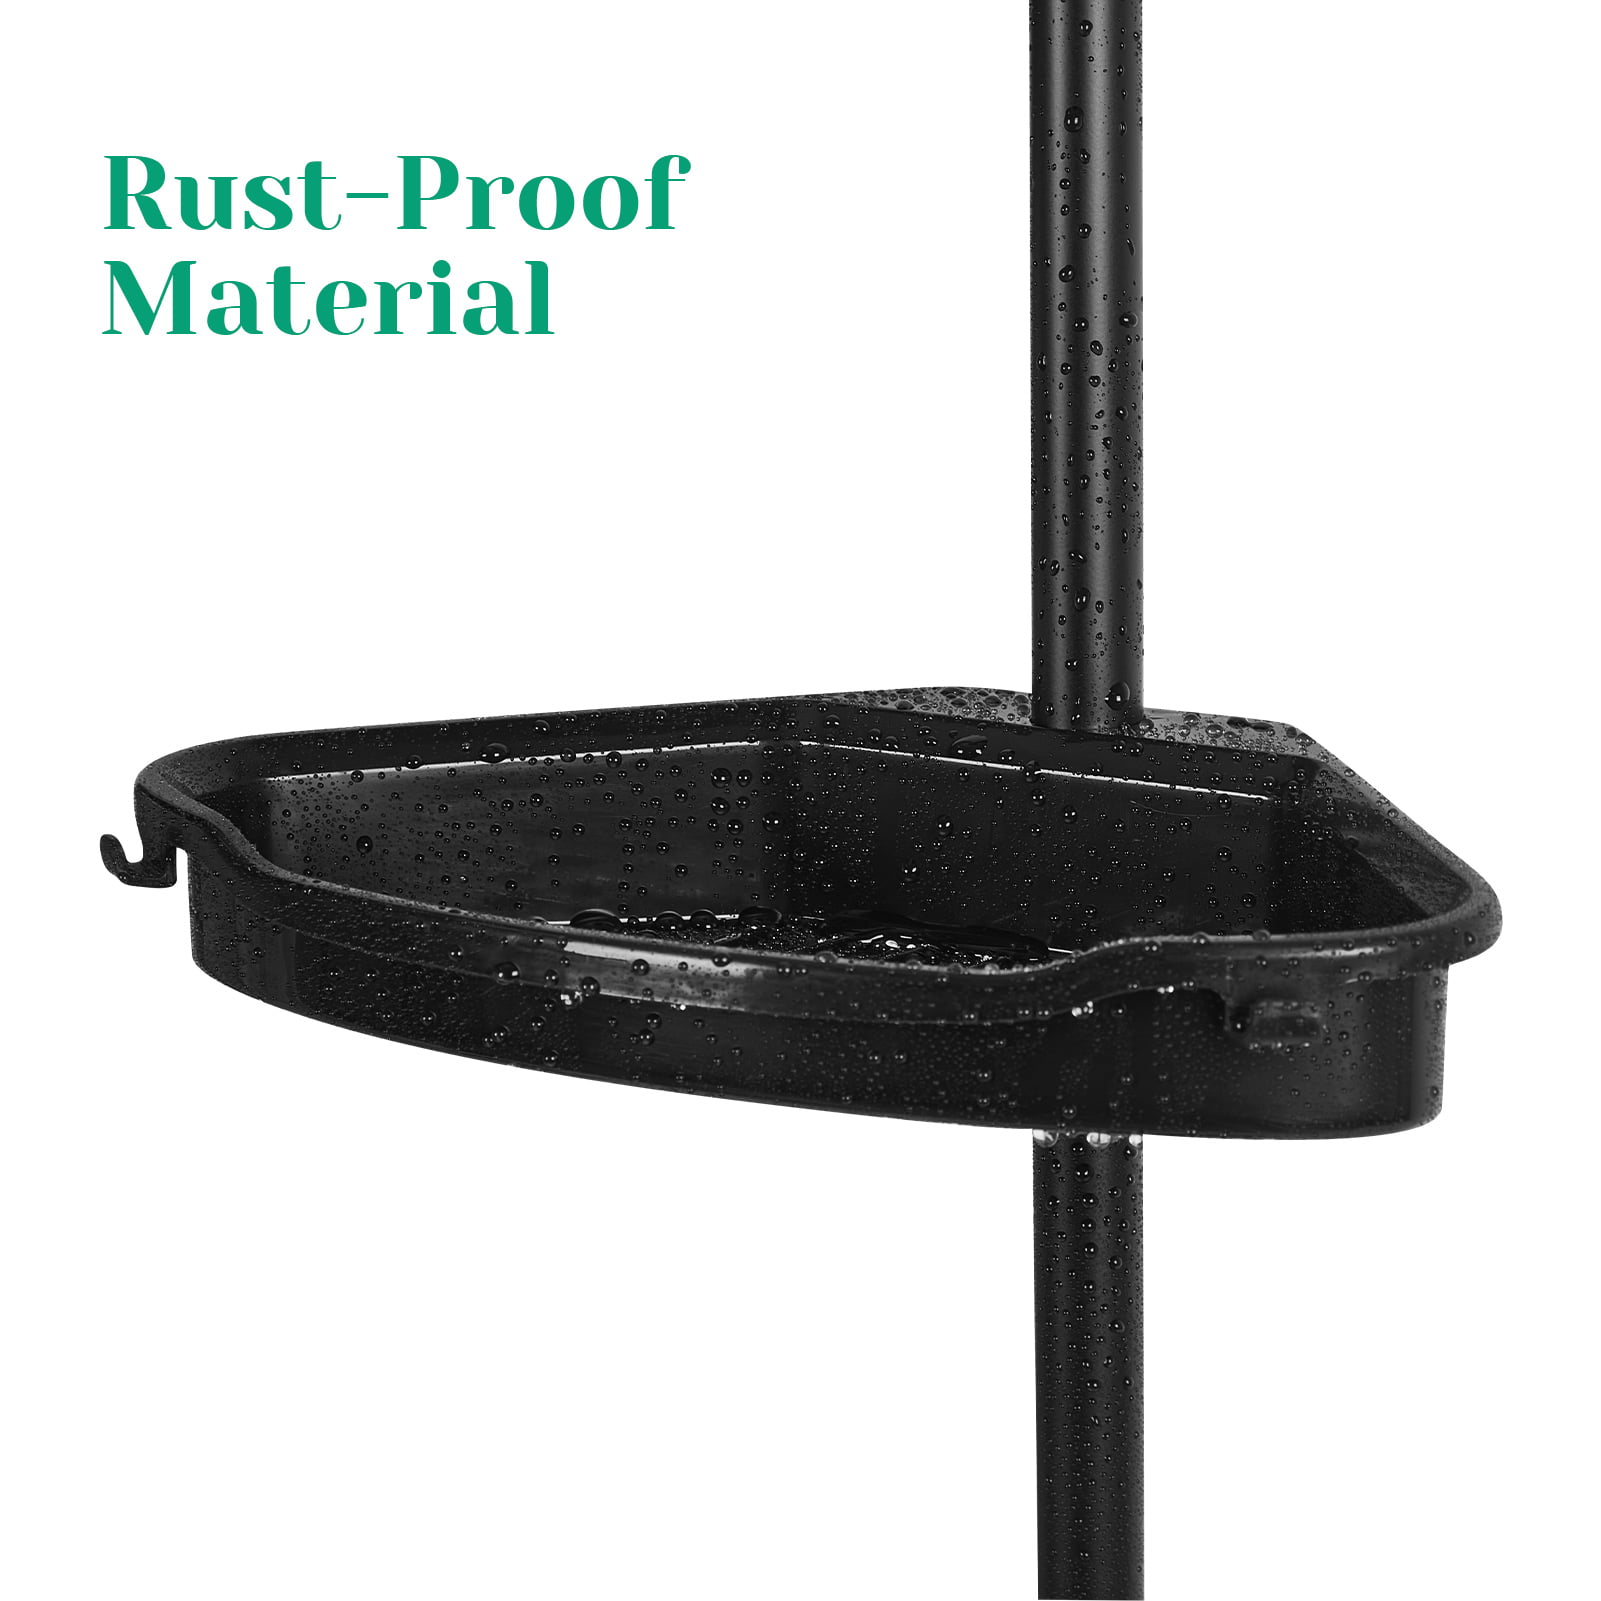 Rustproof Shower Caddy Corner,4-Tier Adjustable Shelves with Tension Pole,Black Rainbow Home Finish: Black